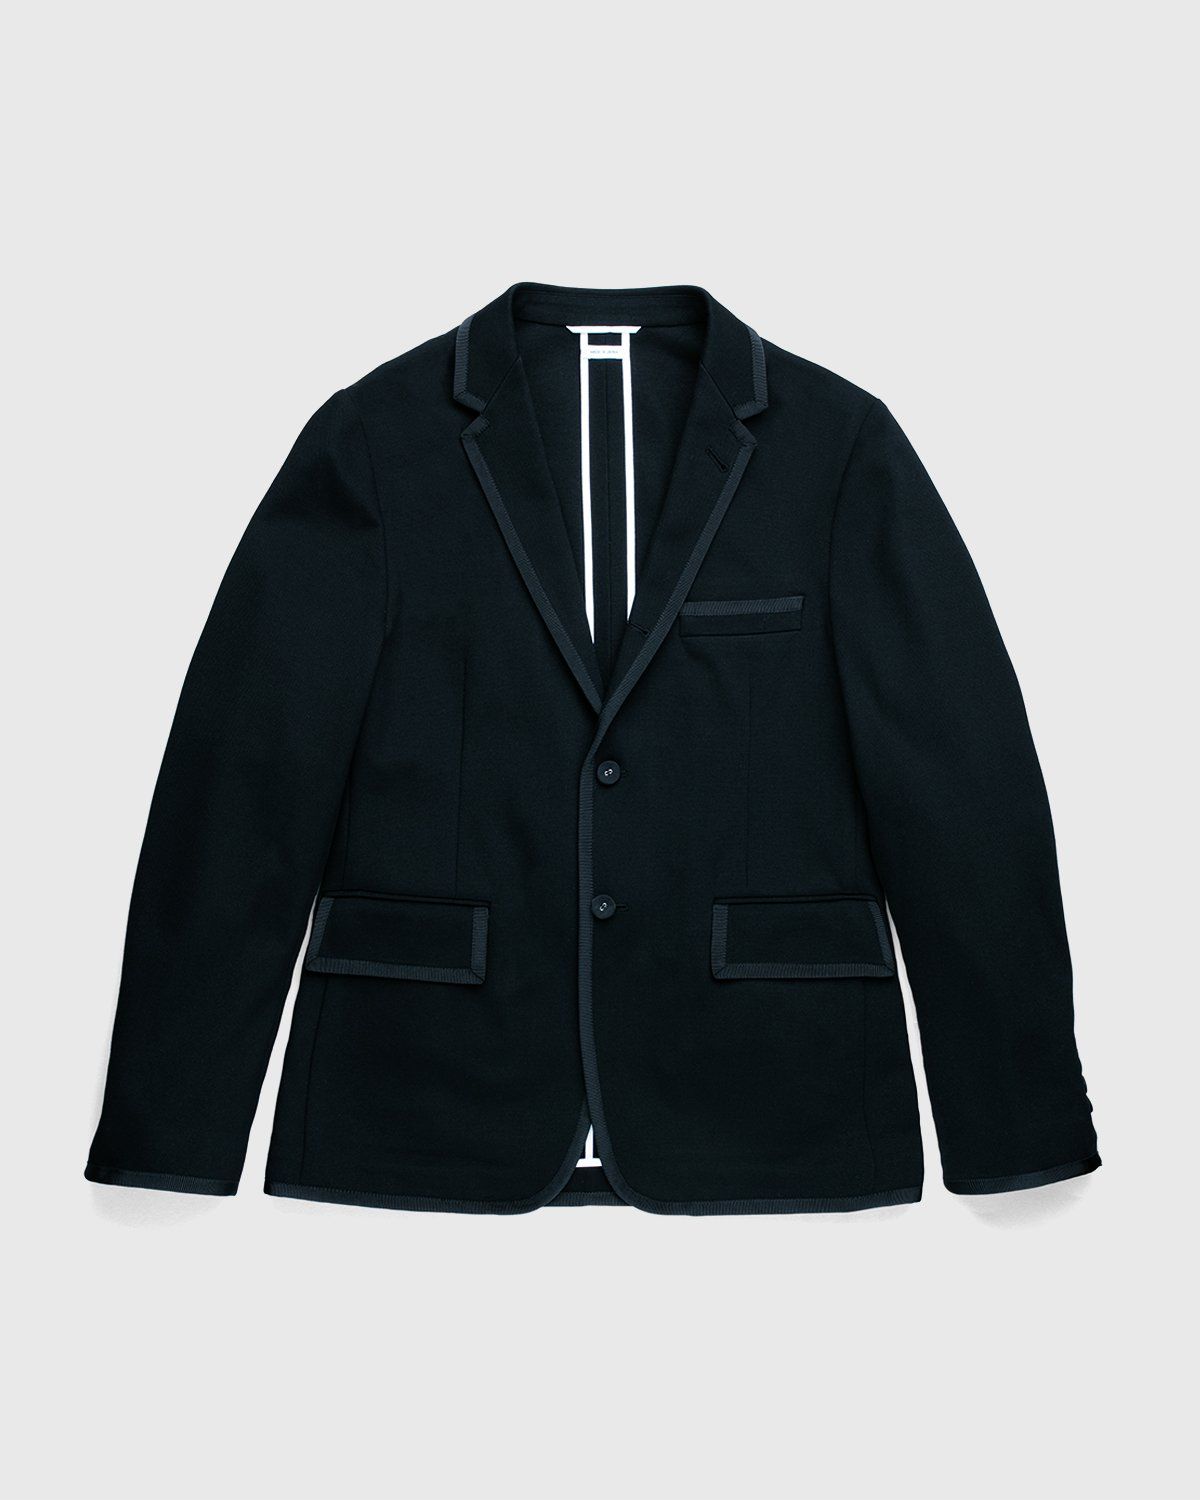 Thom Browne x Highsnobiety – Men Deconstructed Sport Jacket Black - Image 1